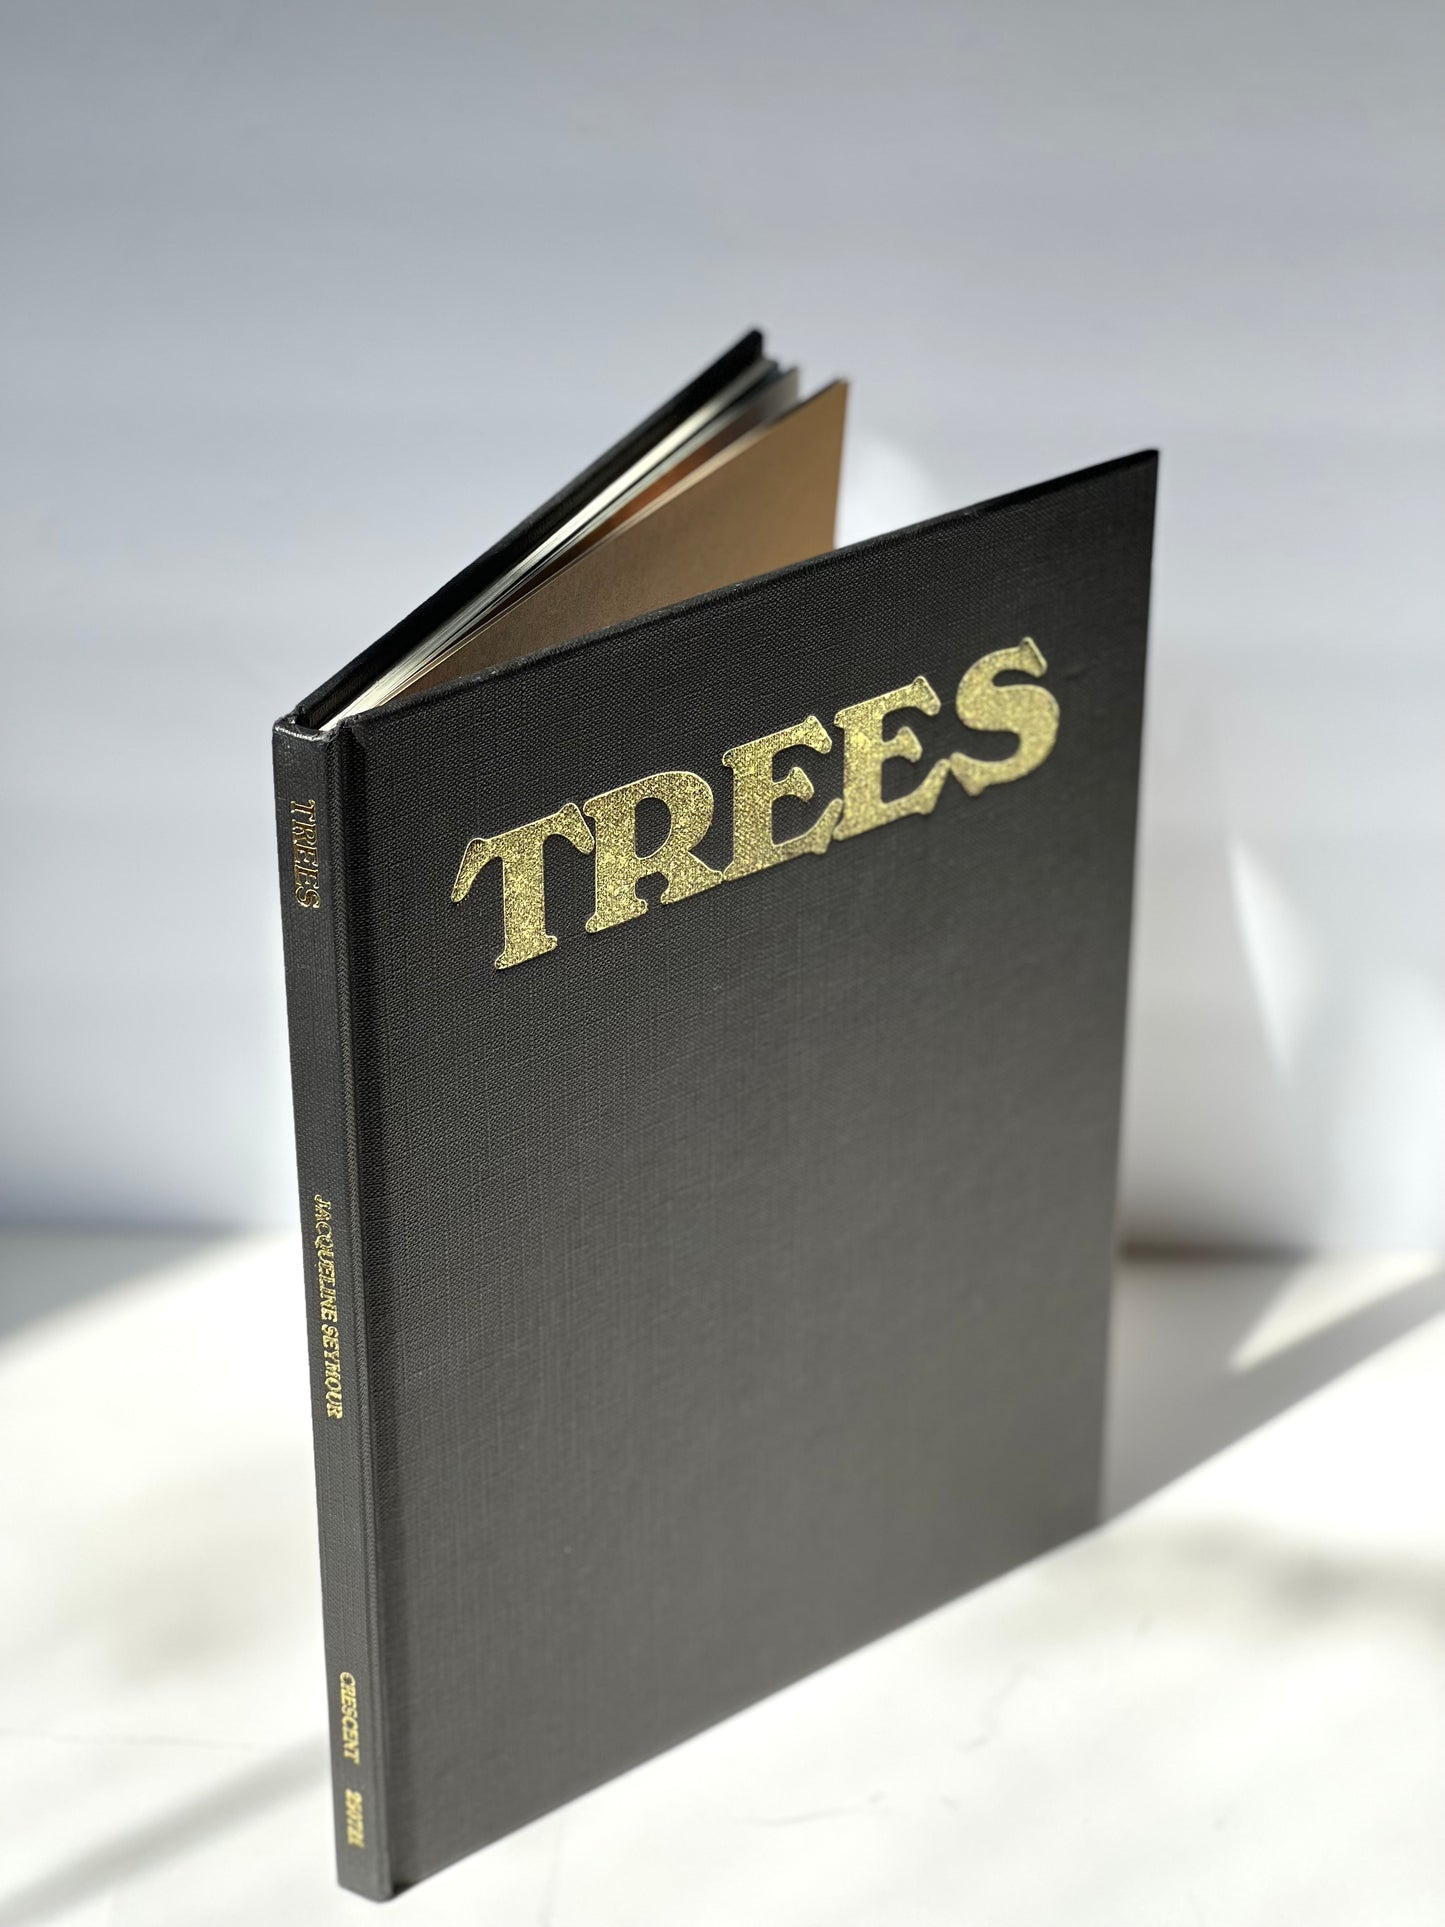 Vintage tree encyclopedia